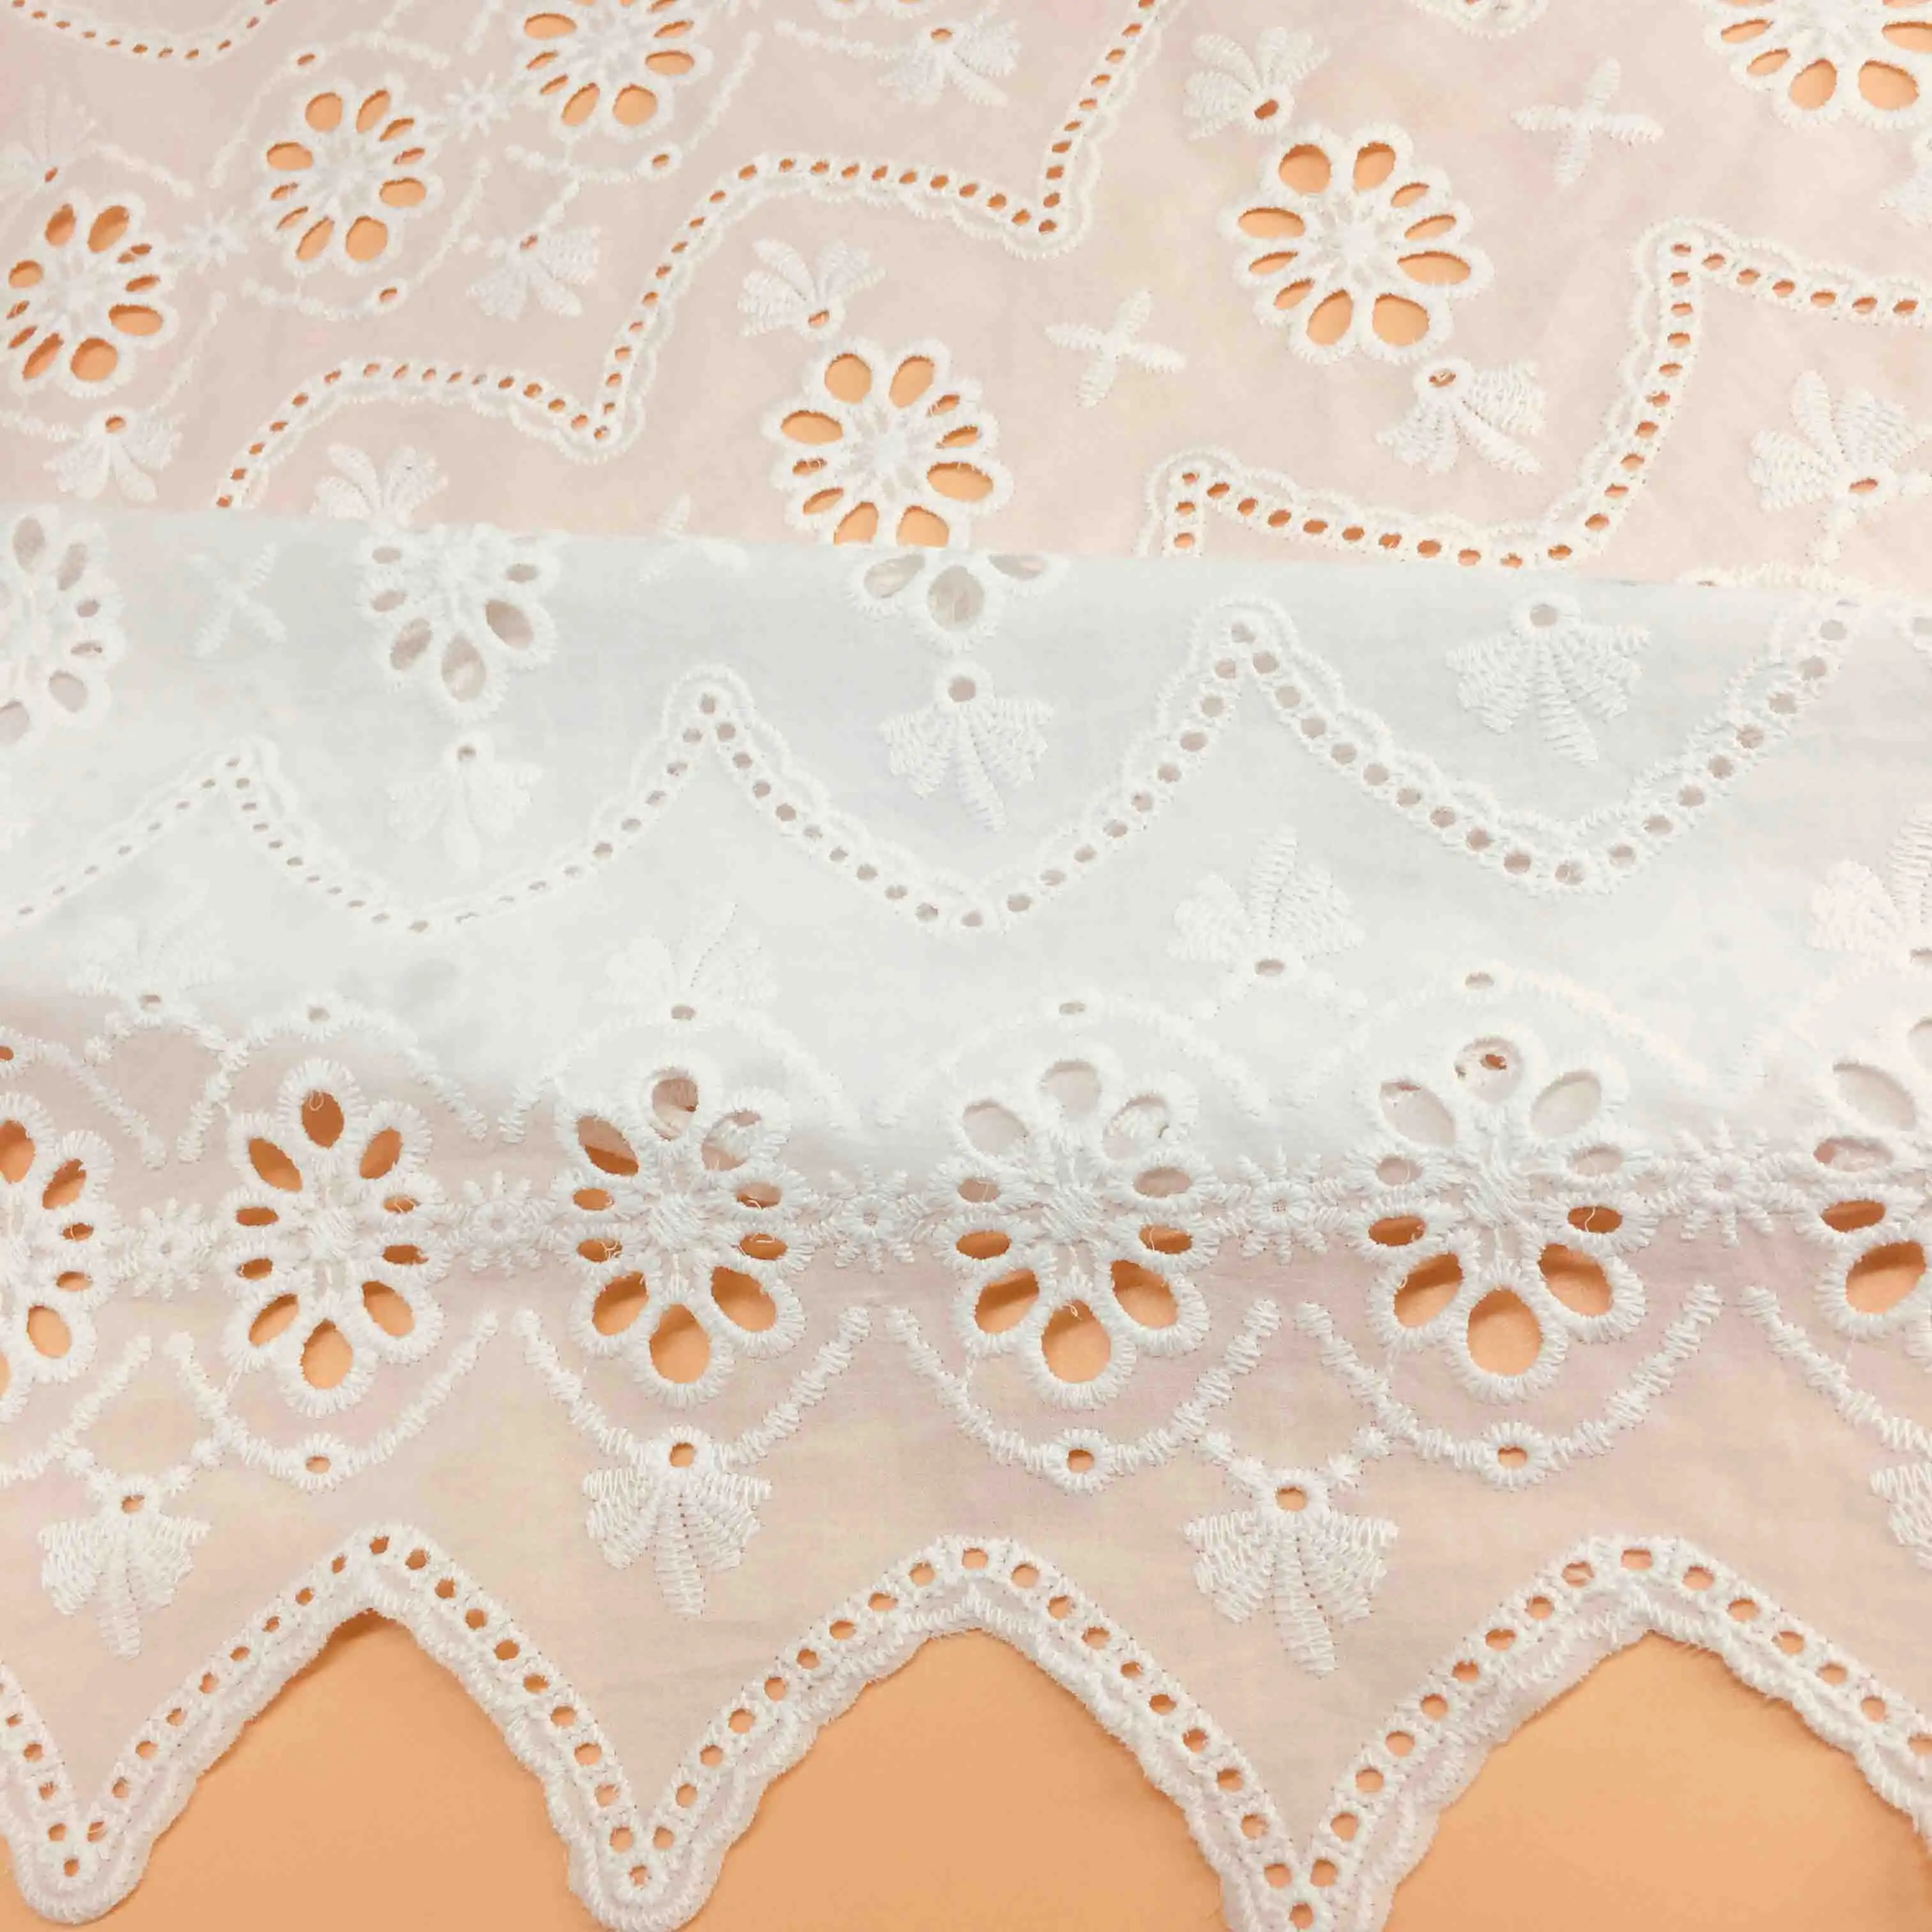 Golden Supplier RXF2013 Jacquard Textile 100% algodón tela ropa borde encaje bordado tela para mujer vestido de fiesta